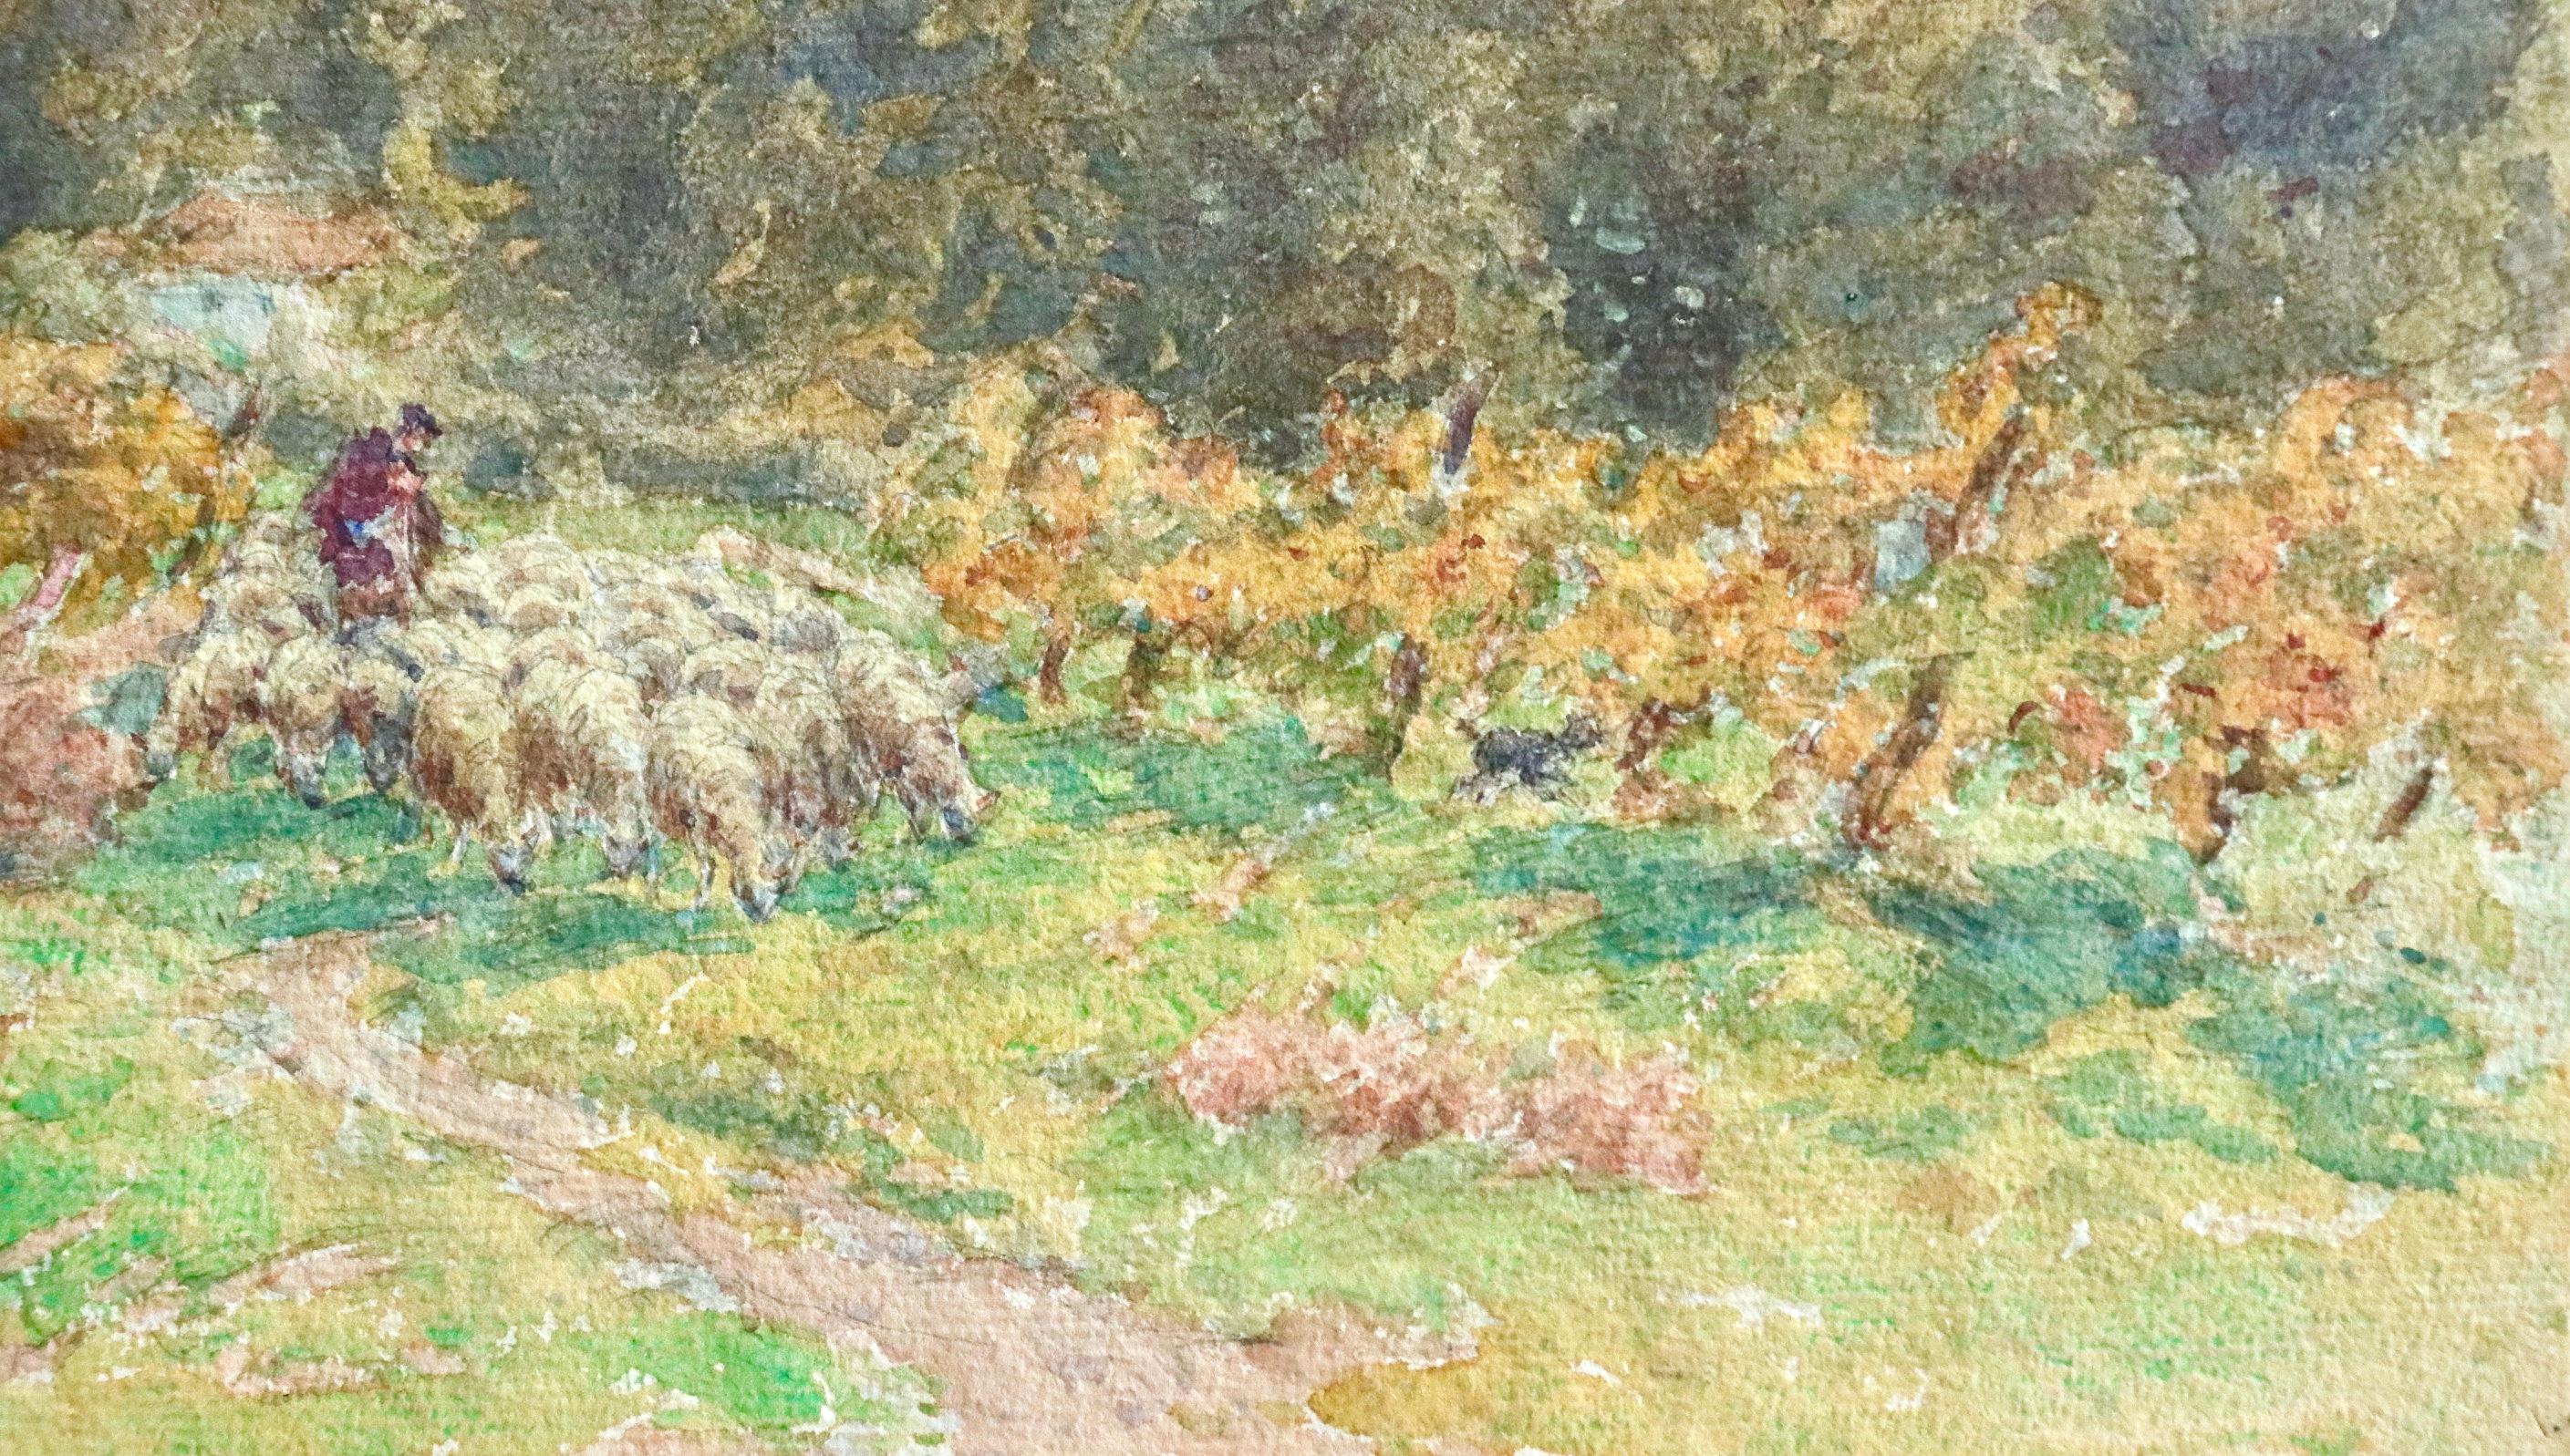 Drover & his Flock -19th Century Watercolor, Figure & Sheep in Landscape - Duhem - Impressionist Art by Henri Duhem